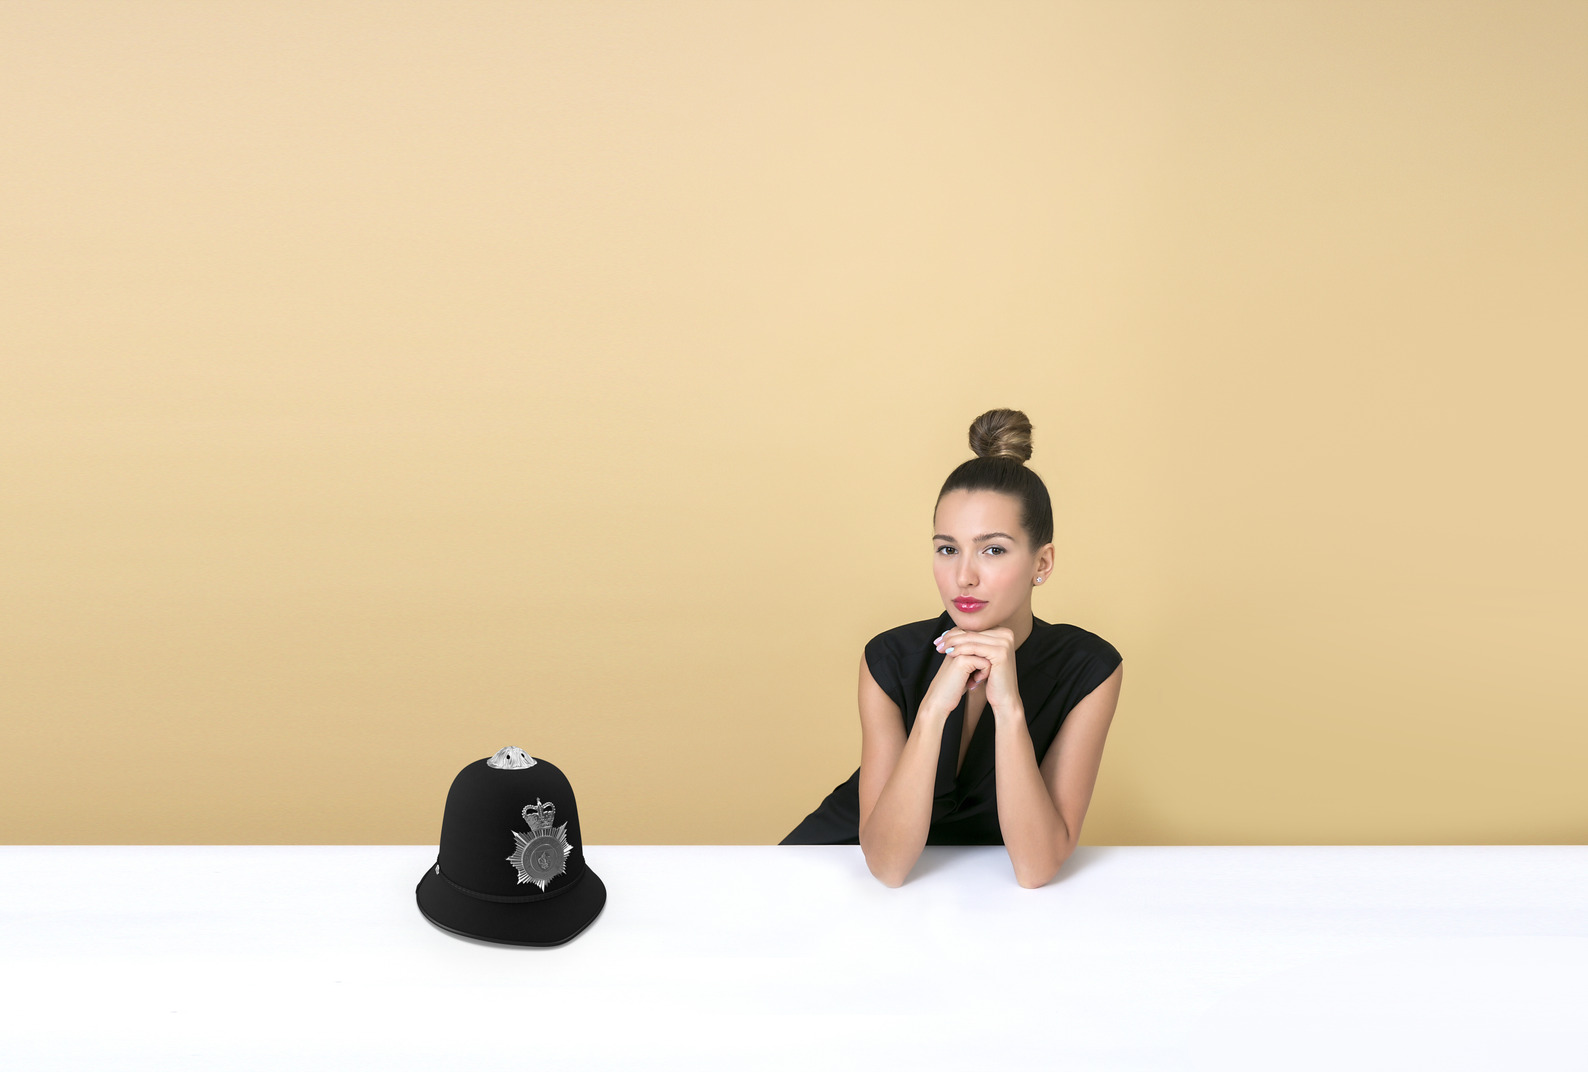 Young beautiful woman sitting next to a custodian helmet